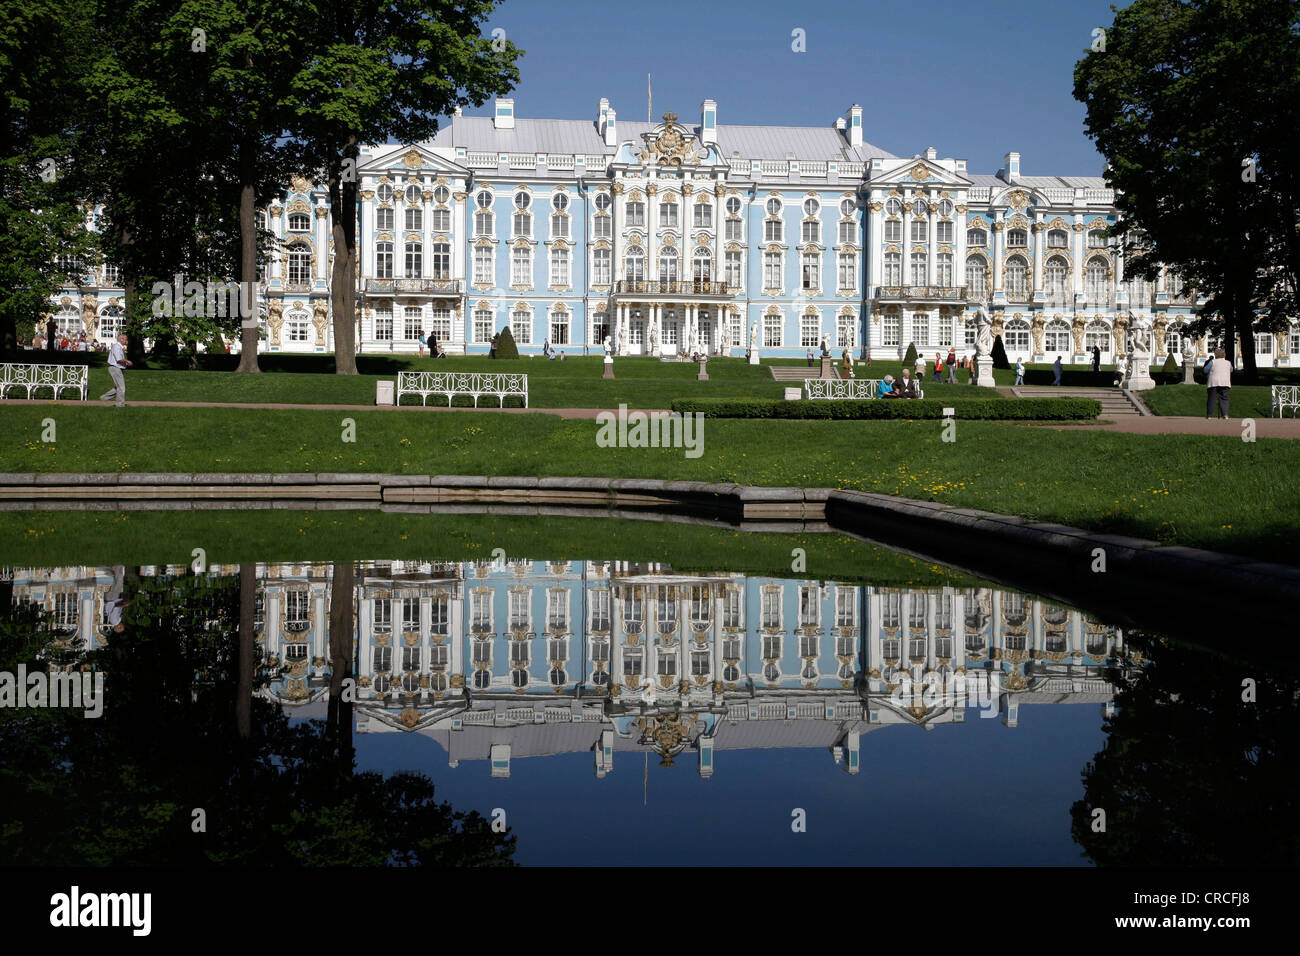 Spiegelung im Wasser, Katharinenpalast, Zarskoje Selo, UNESCO-Weltkulturerbe, St. Petersburg, Russland Stockfoto